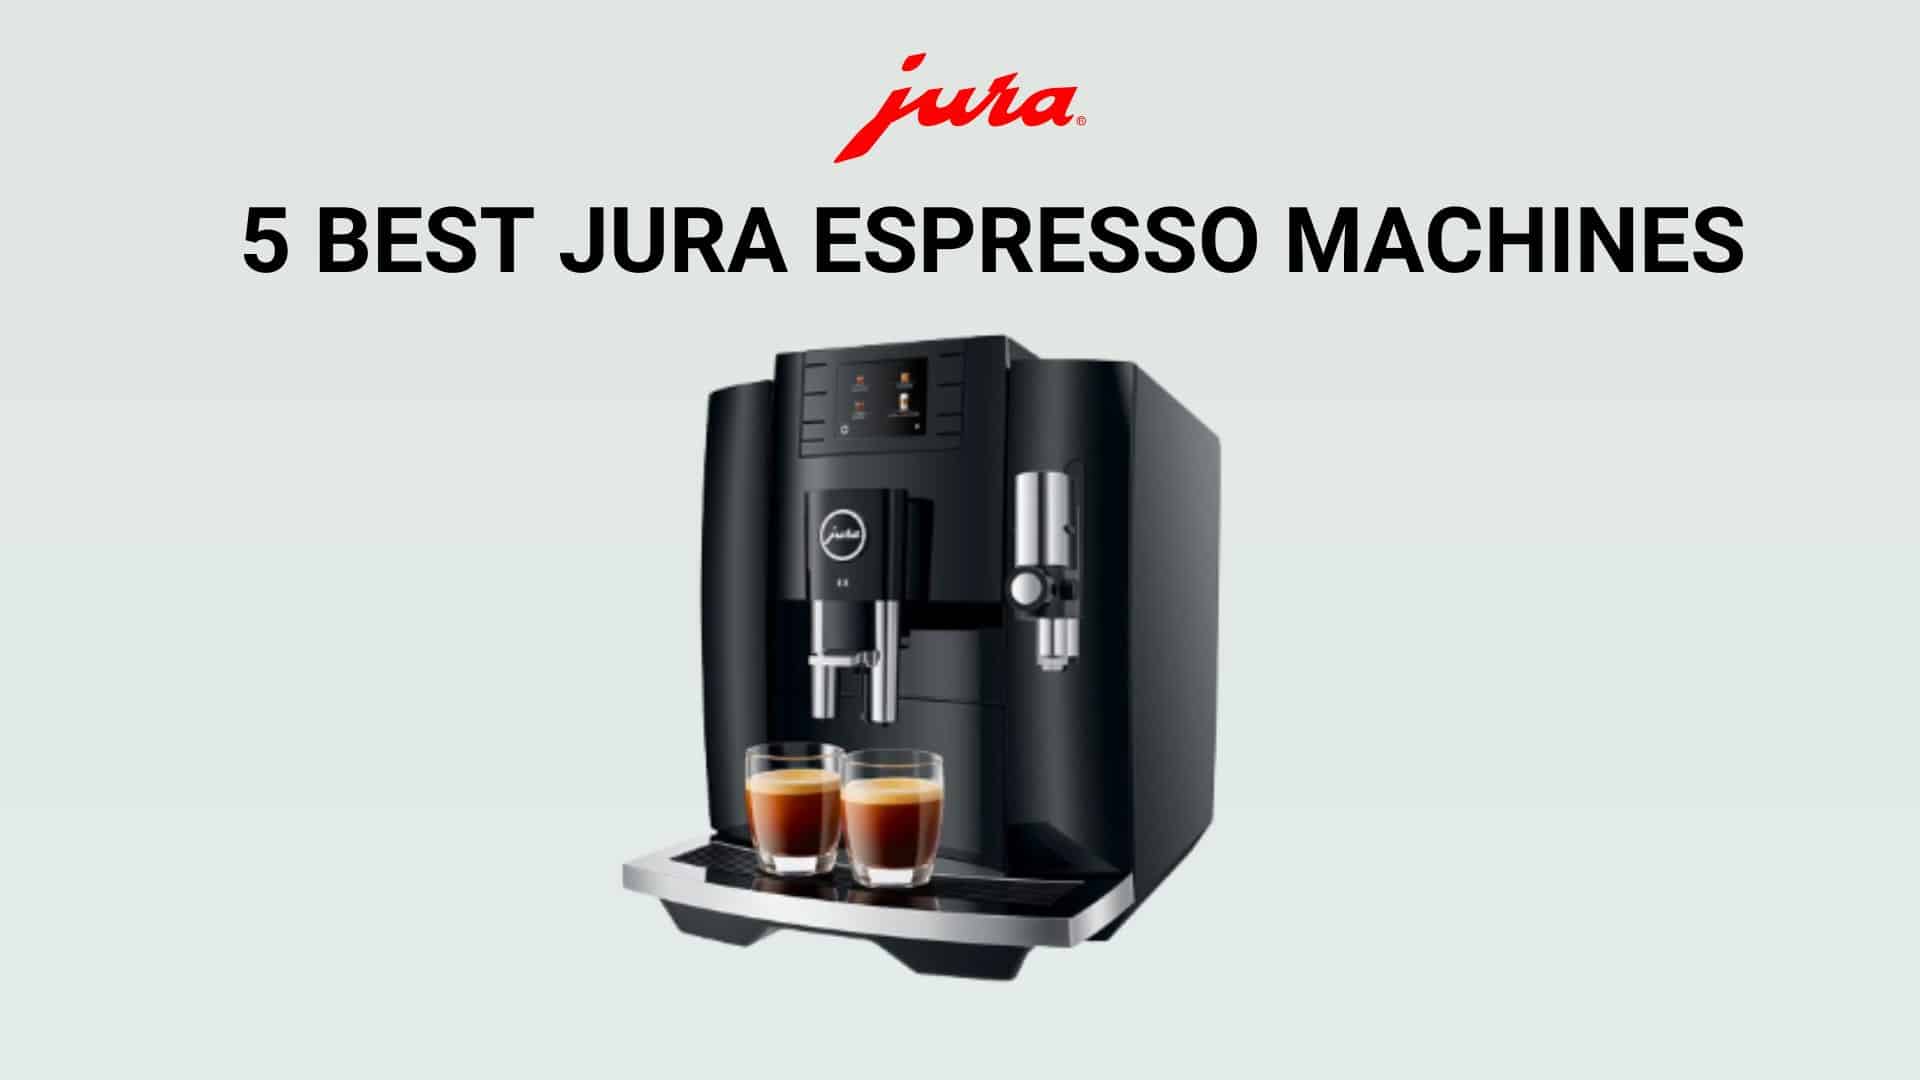 5 best jura espresso machines: Jura E8, E6, S8, ENA 4 and more ...